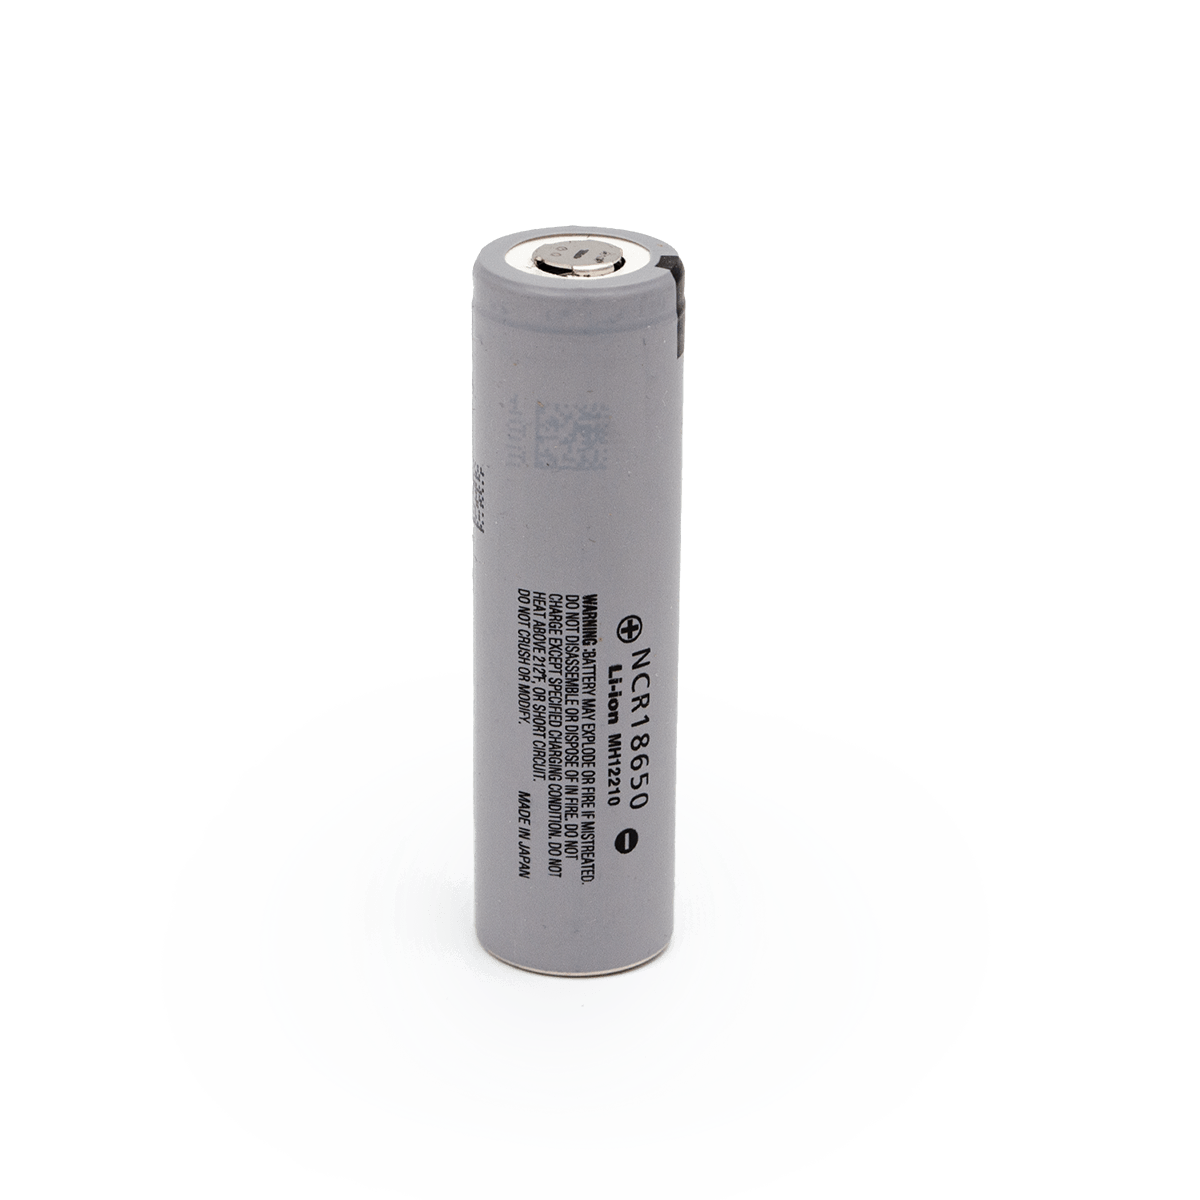 Panasonic NCR18650 battericelle